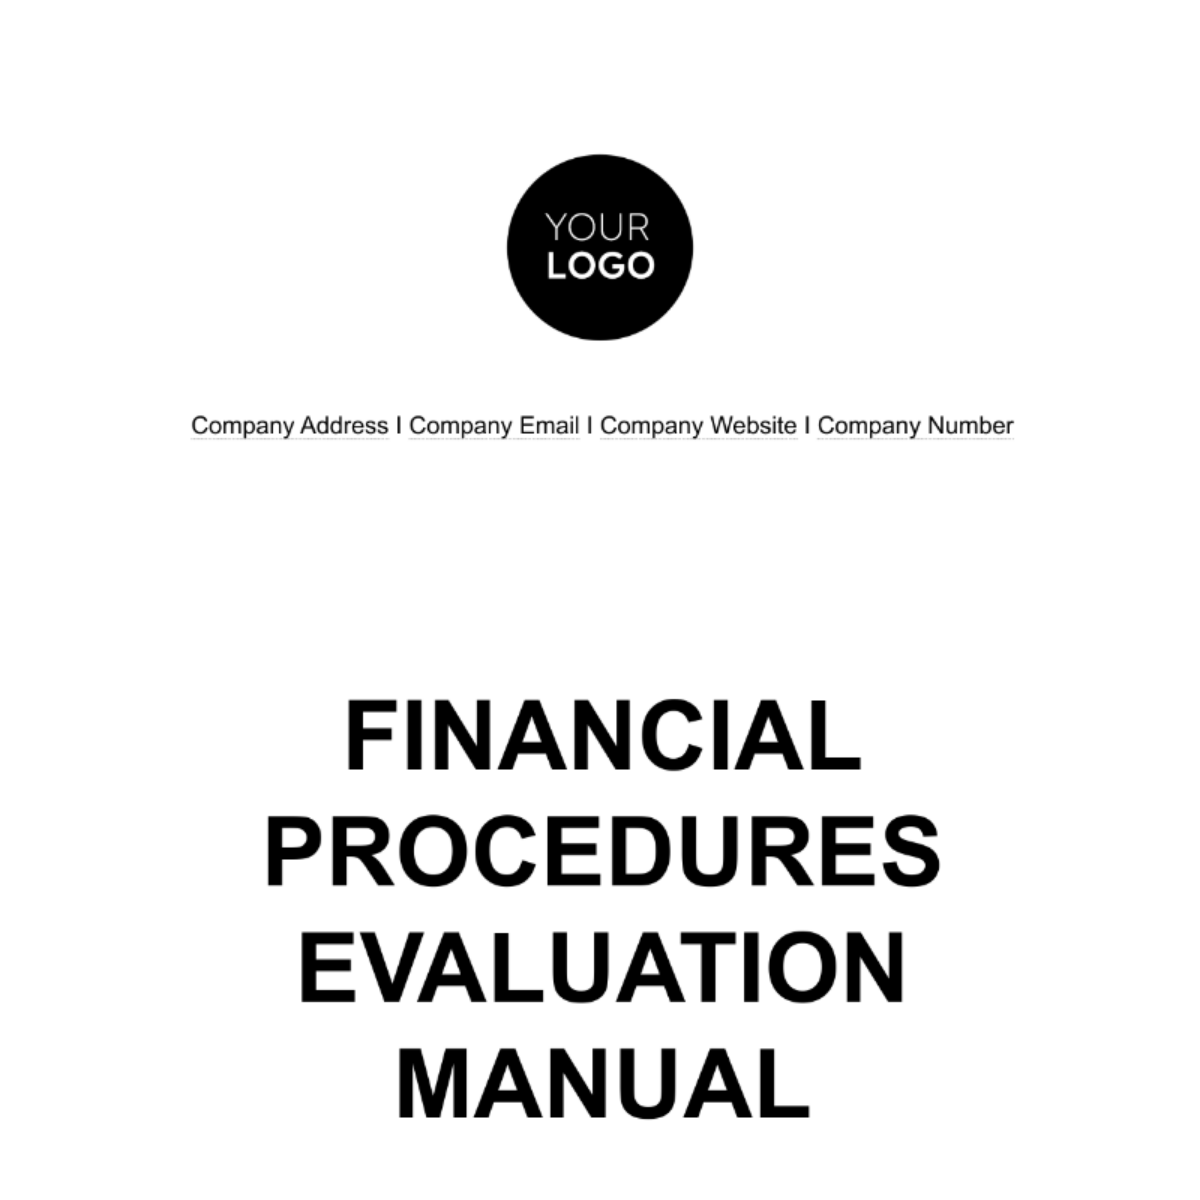 Financial Procedures Evaluation Manual Template